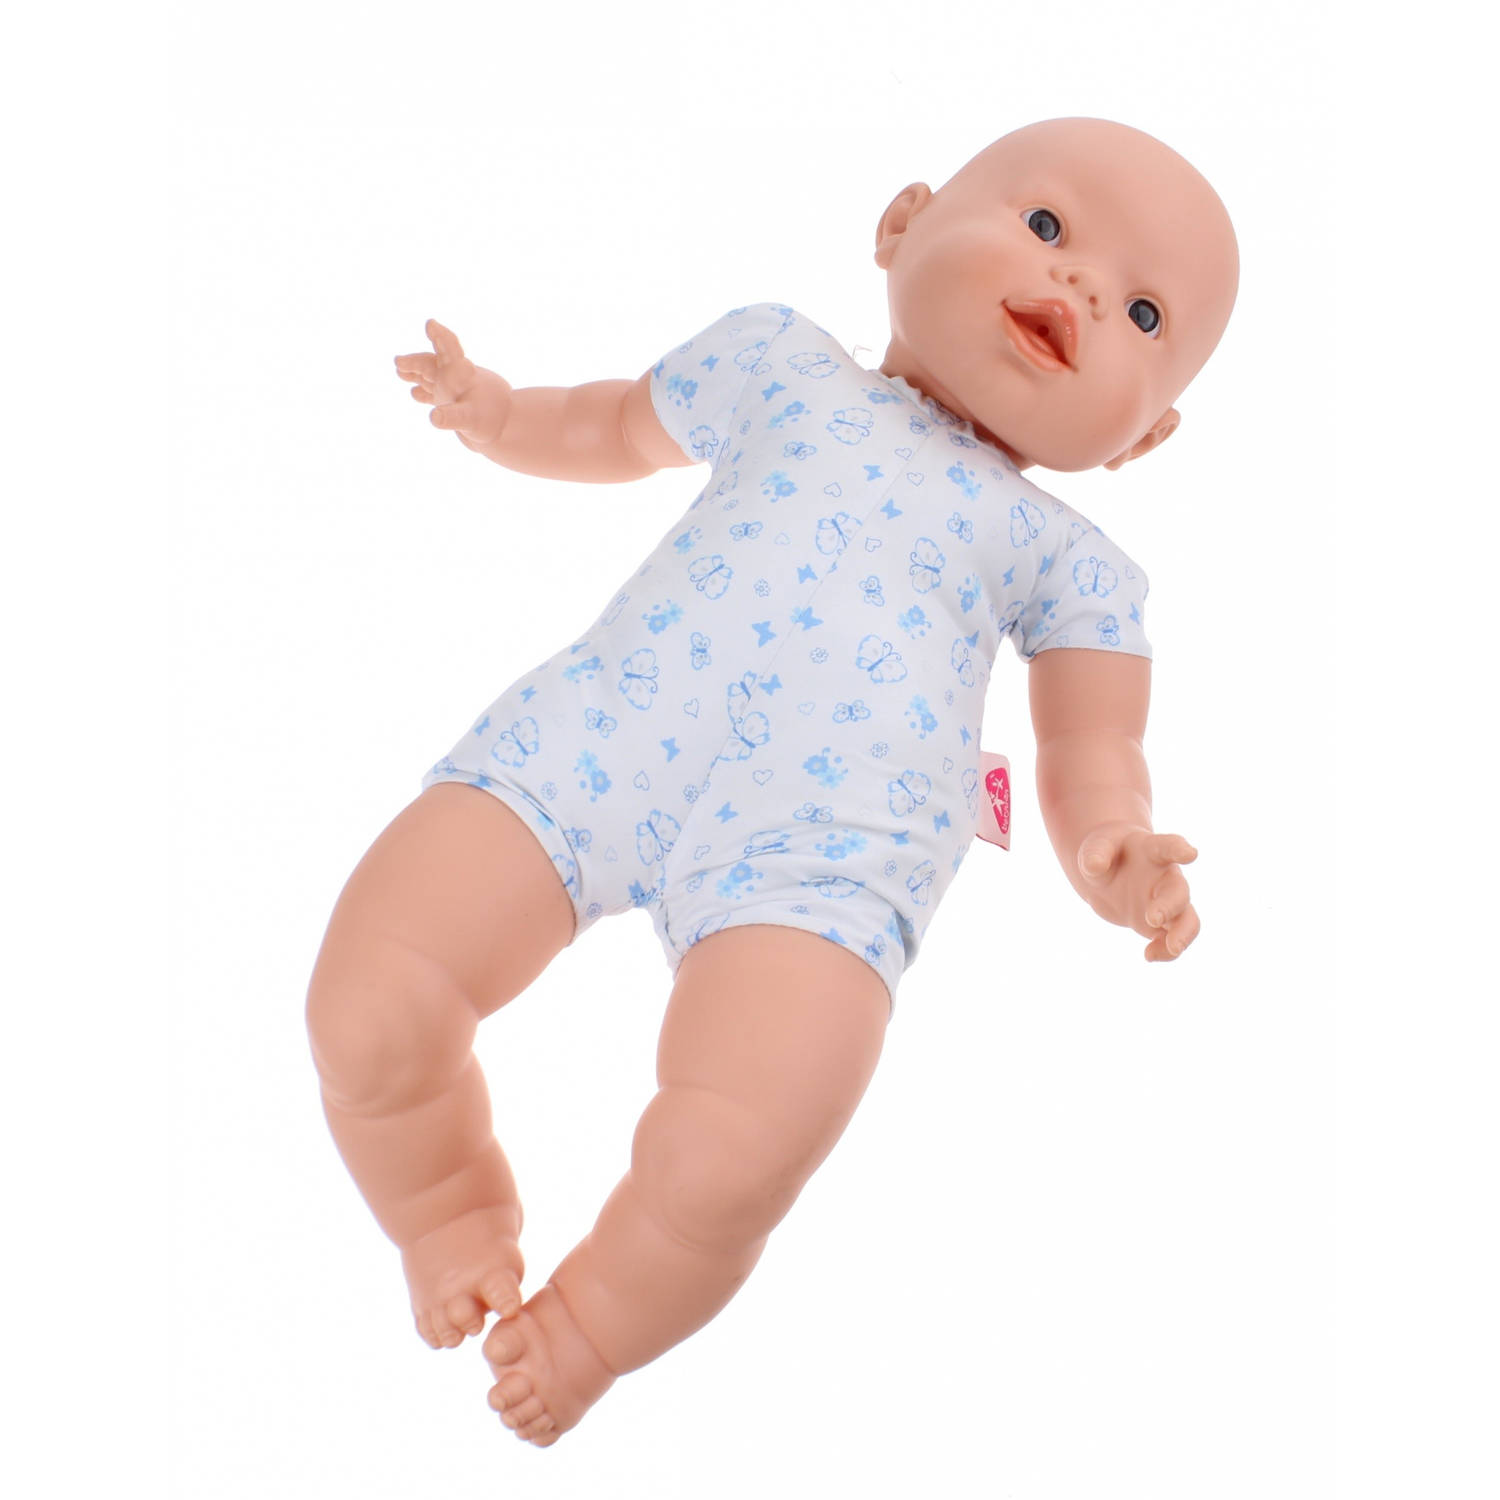 Overjas Imperial Rudyard Kipling Berjuan babypop Newborn soft body Europees 45 cm jongen | Blokker